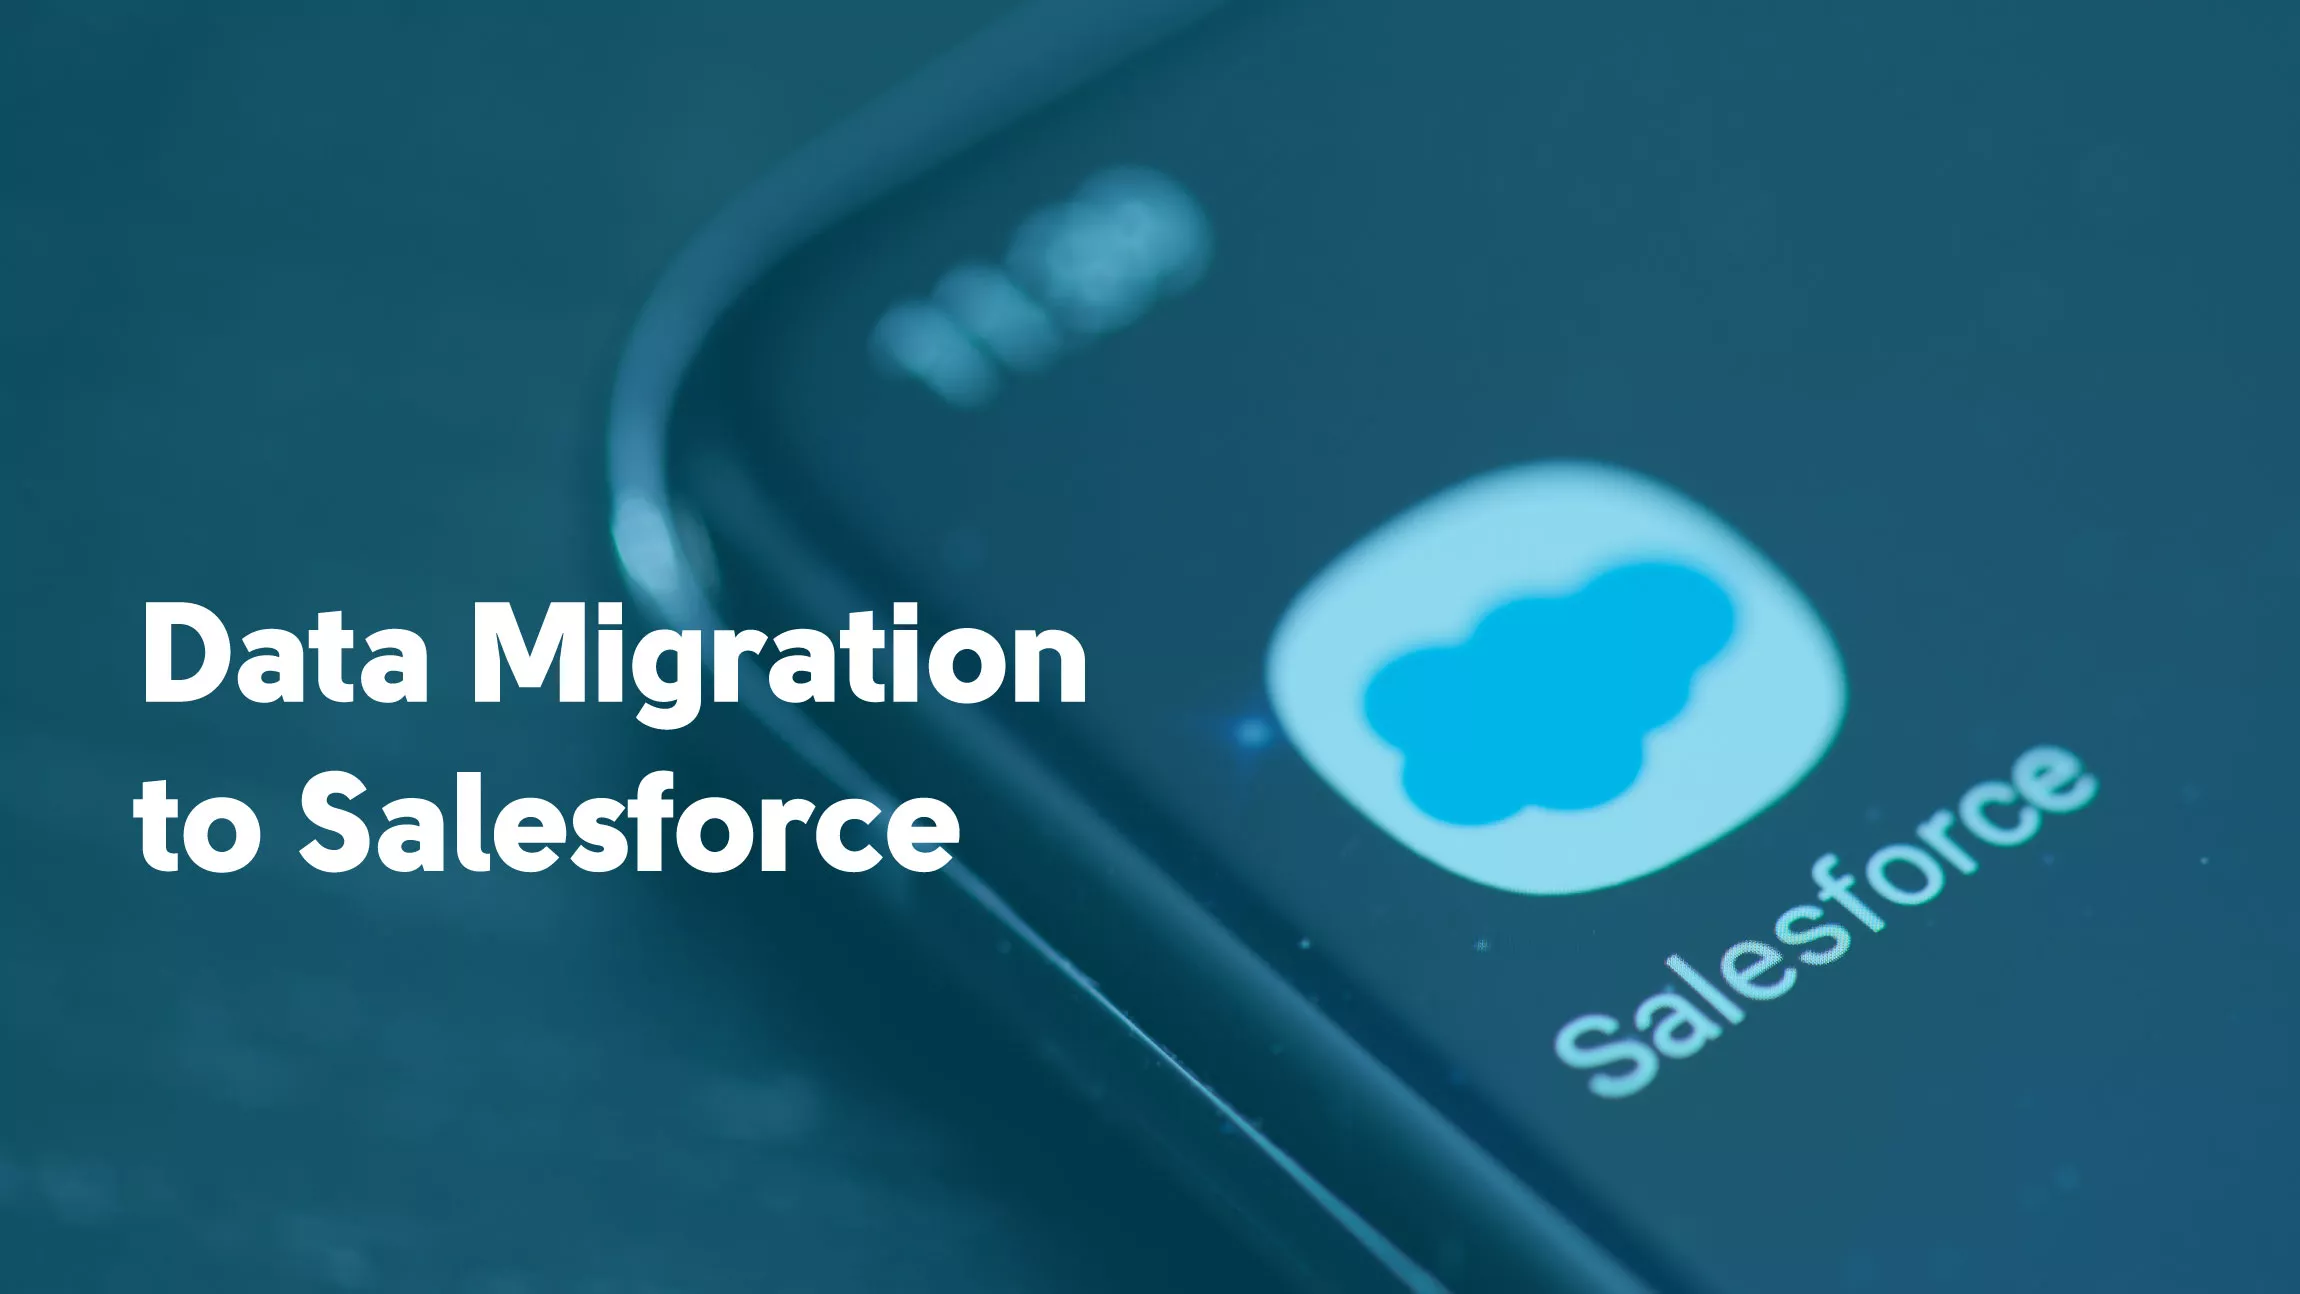 Data Migration to Salesforce - Best Practices